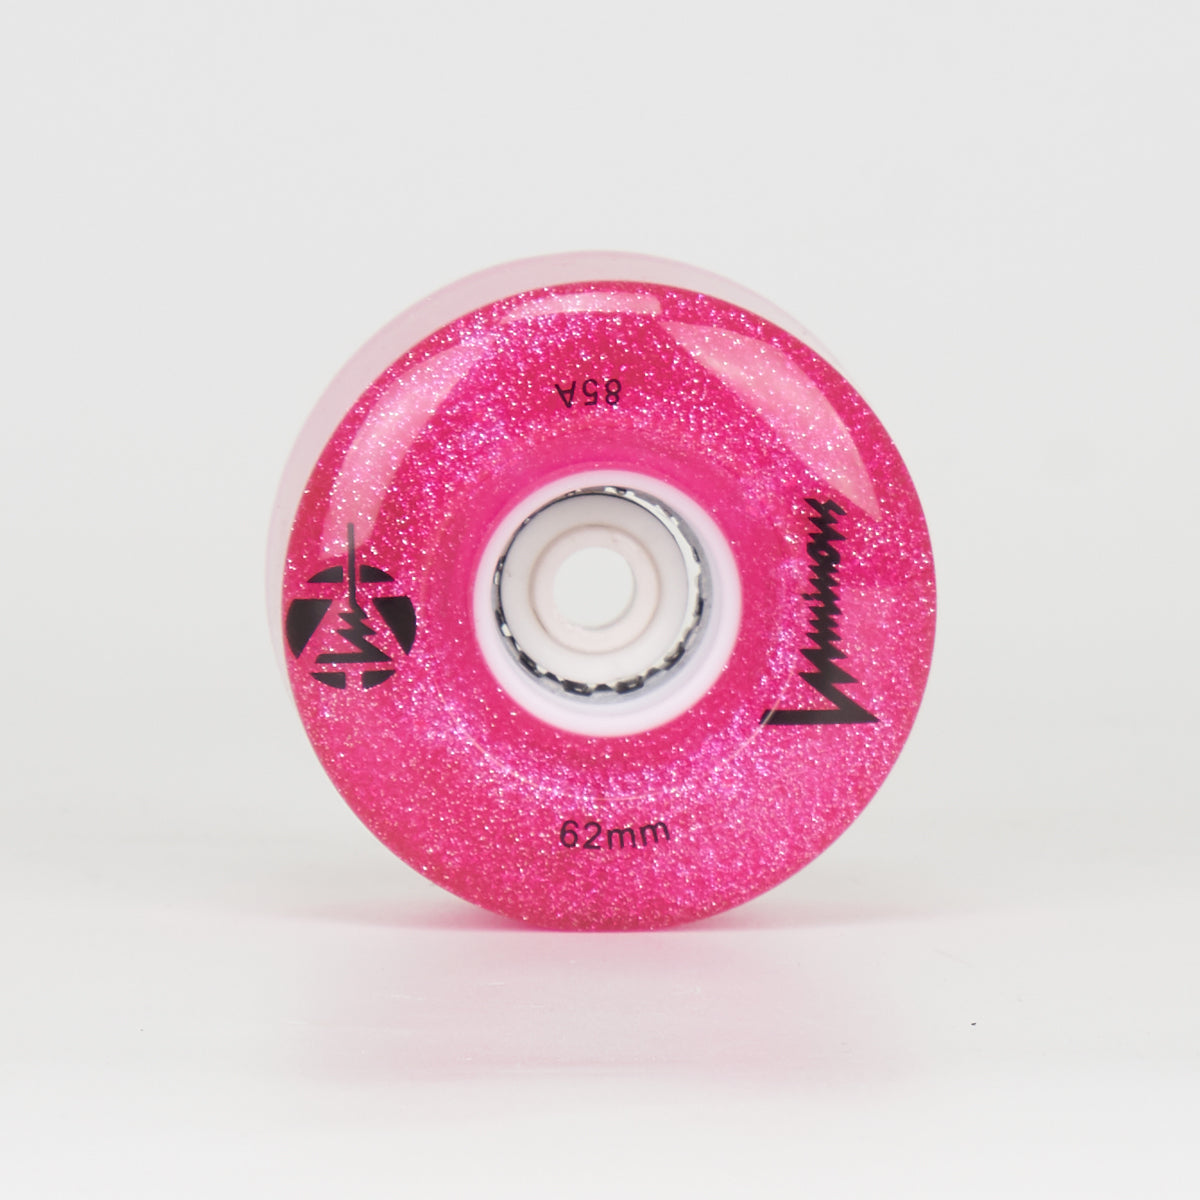 Luminous LED Light Up 62mm/85a Wheels - Pink Glitter (Singles)